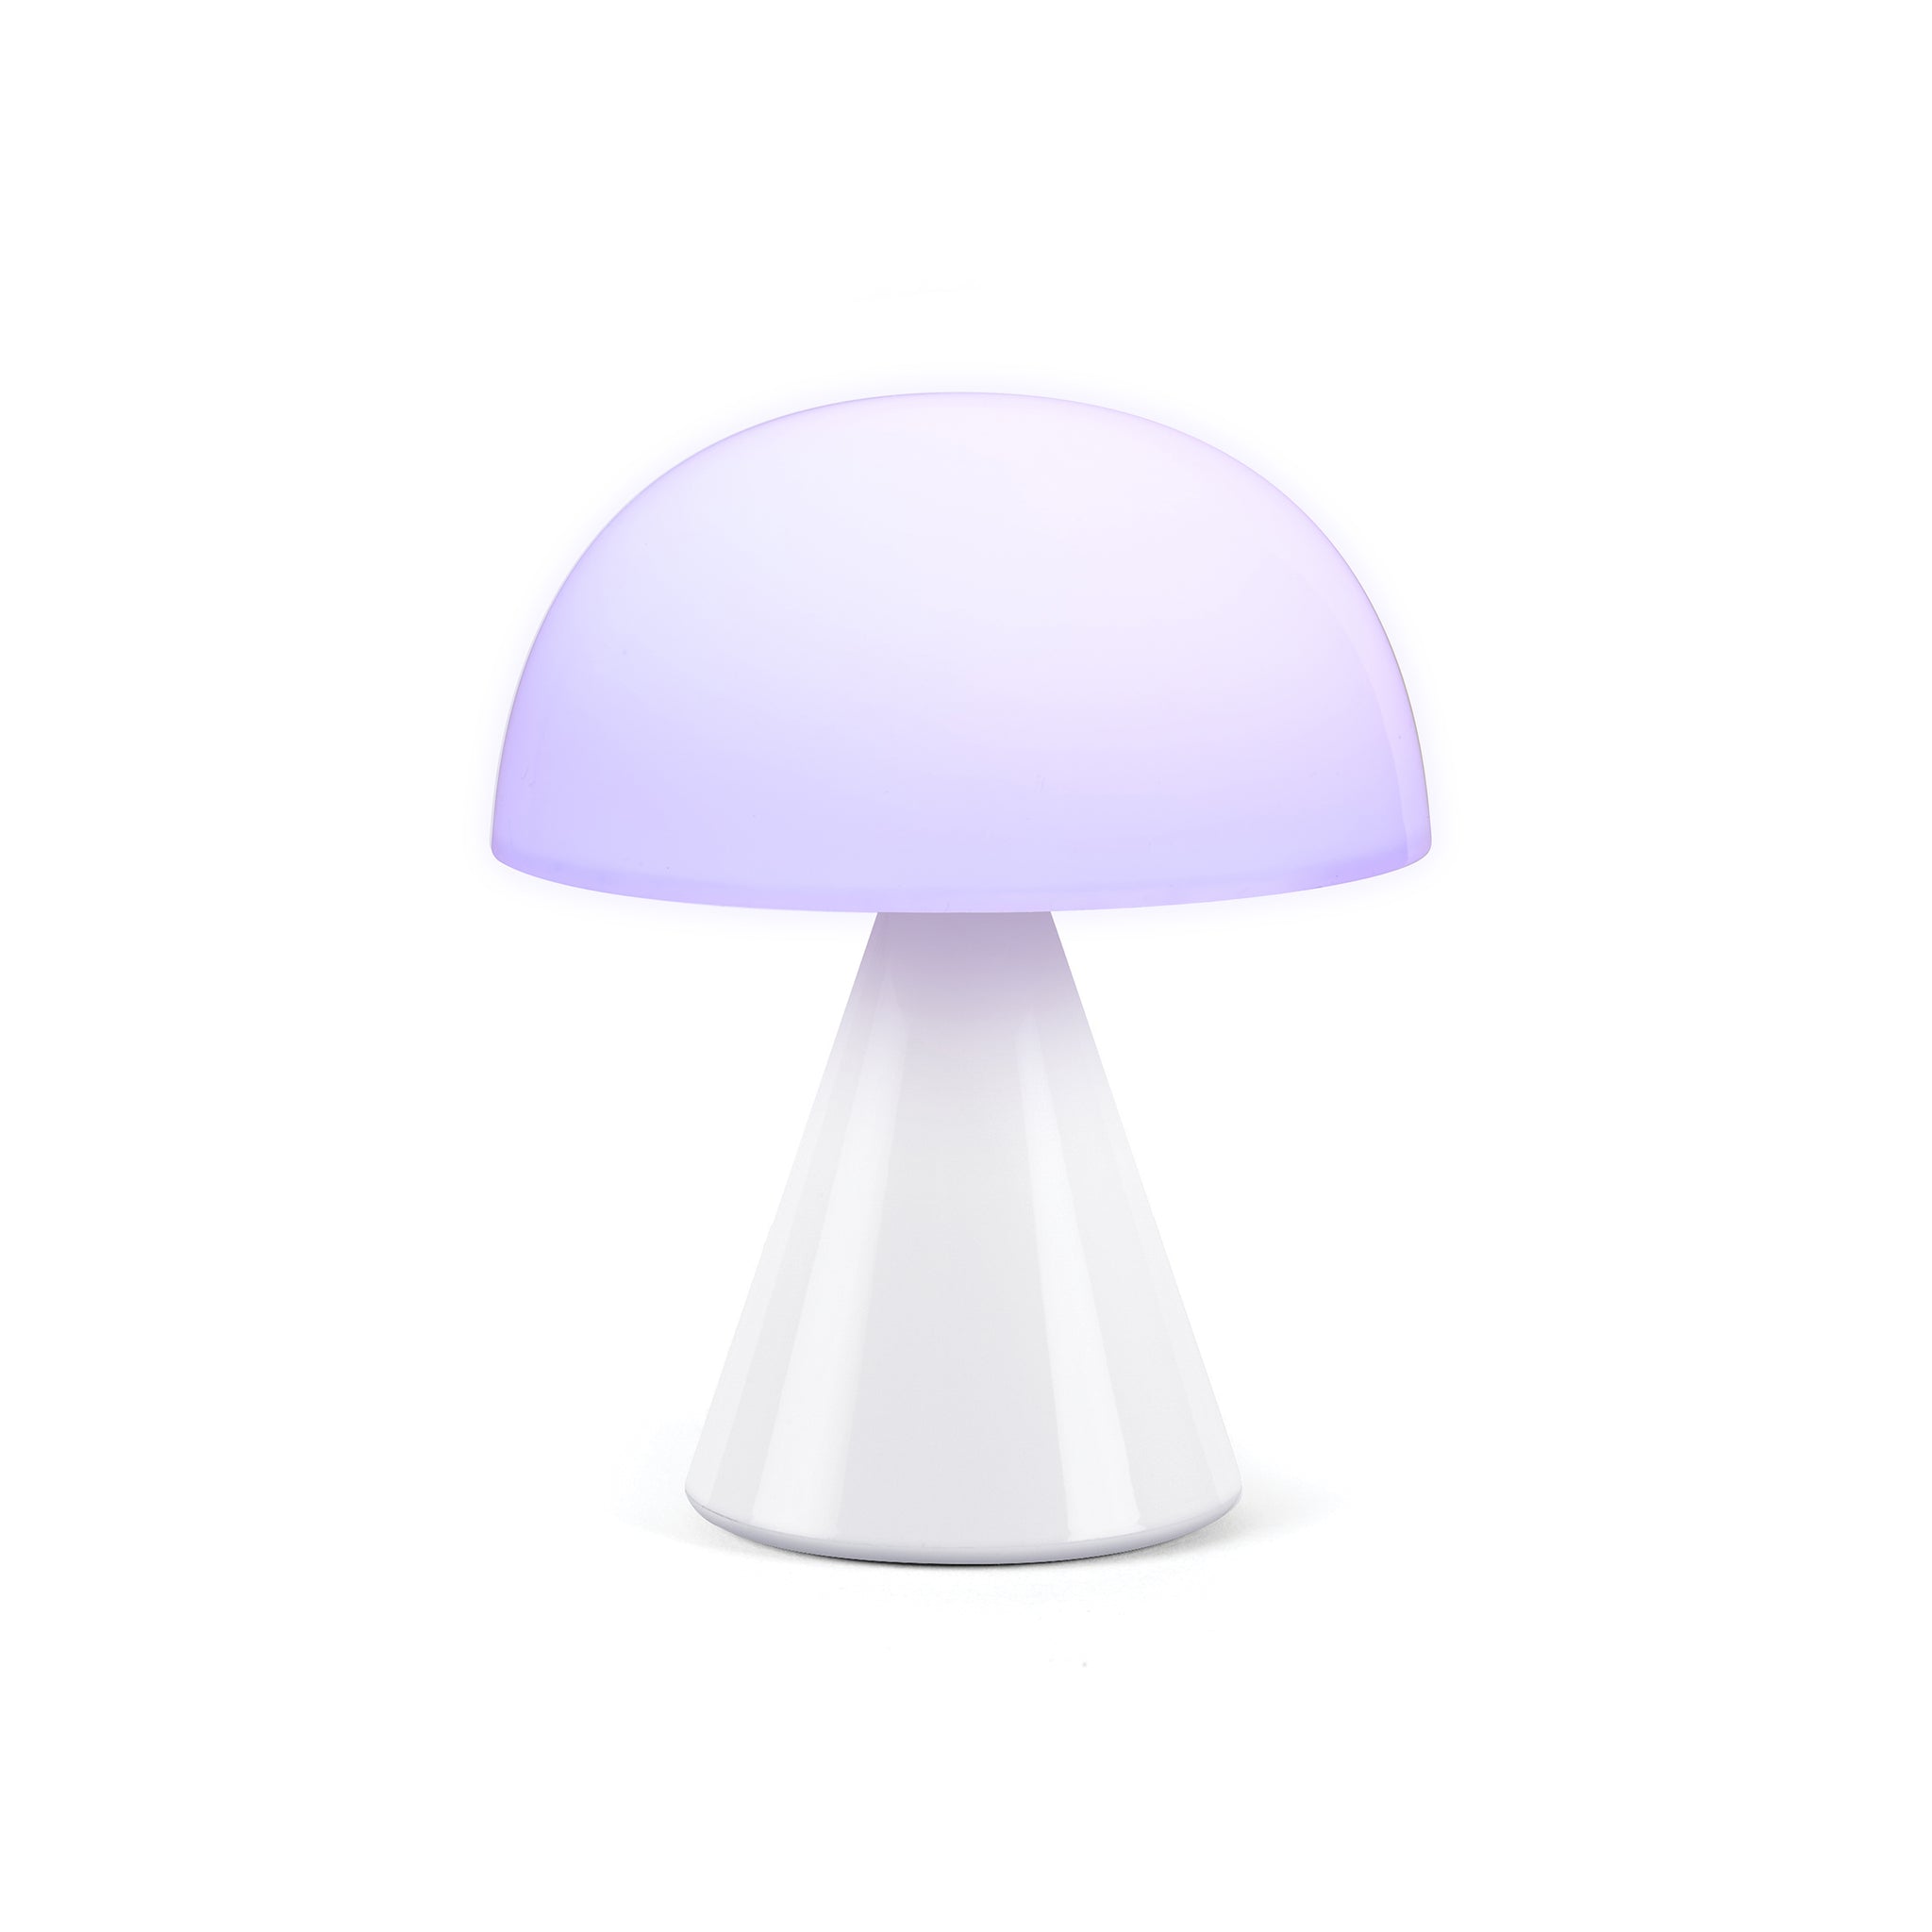 Lexon Mina Medium Glossy White│Oplaadbare LED-Lamp│art. LH64WG│vooraanzicht met paars licht aan